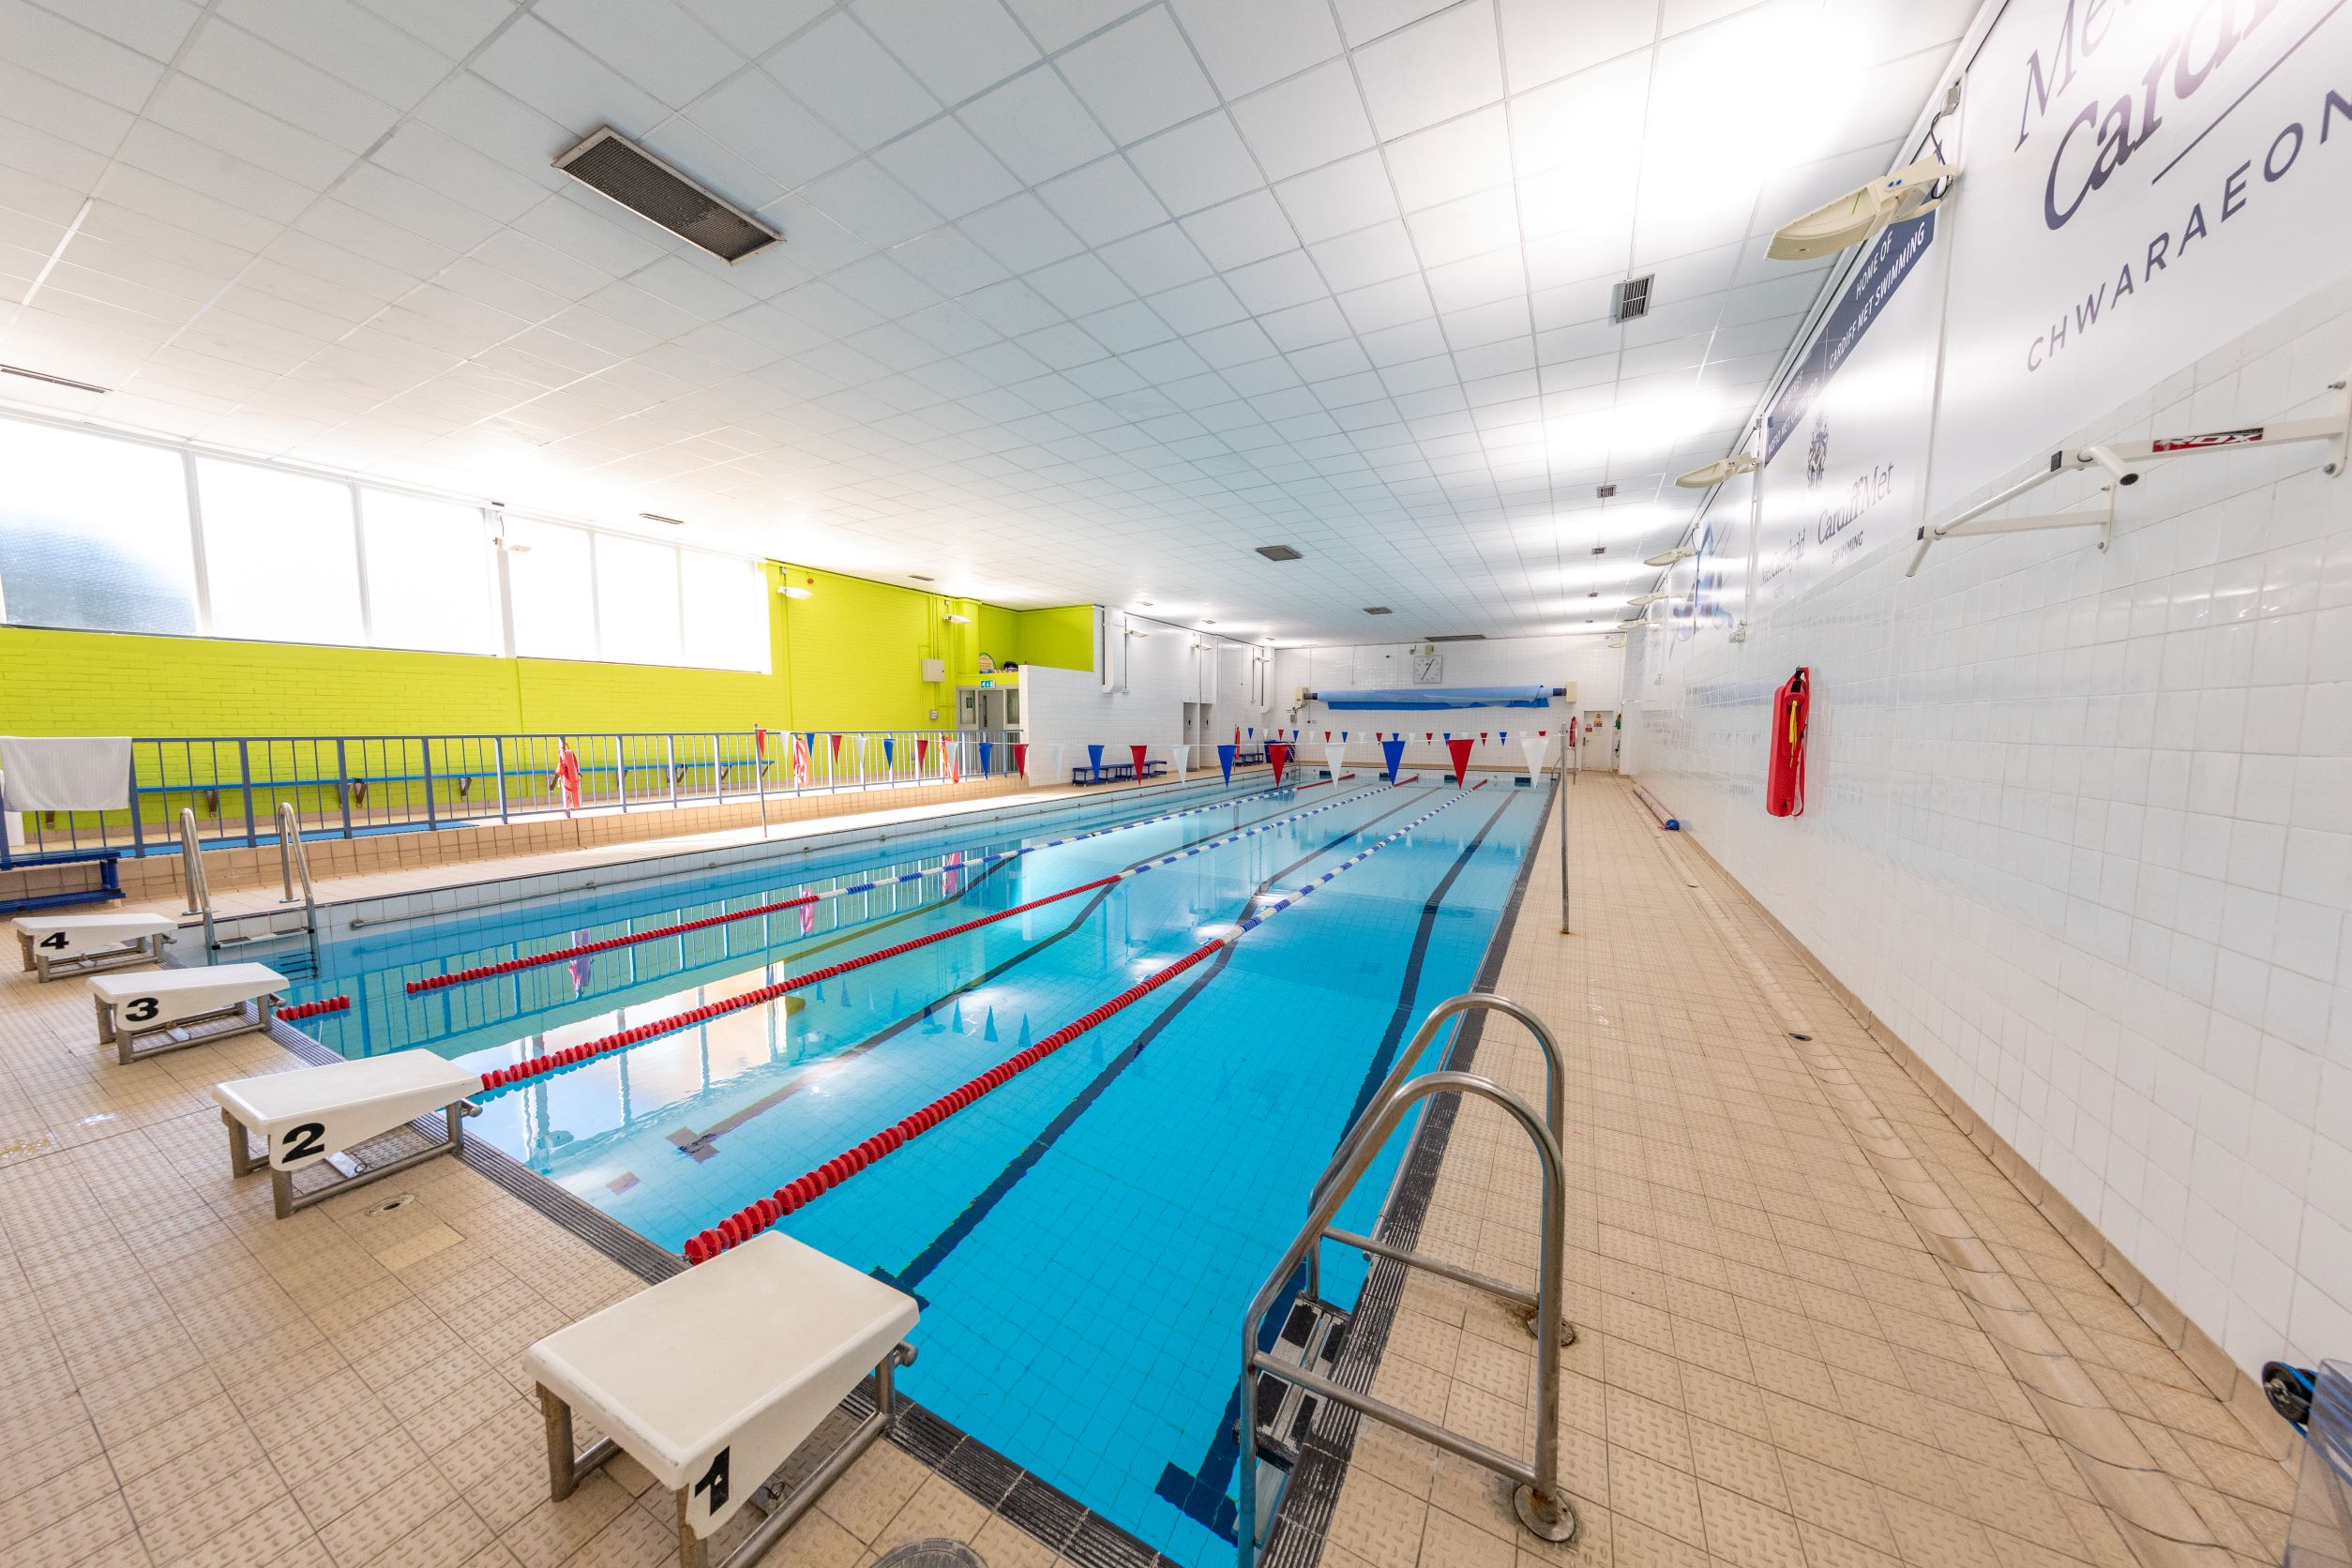 Cardiff met sport swimming pool new.jpg